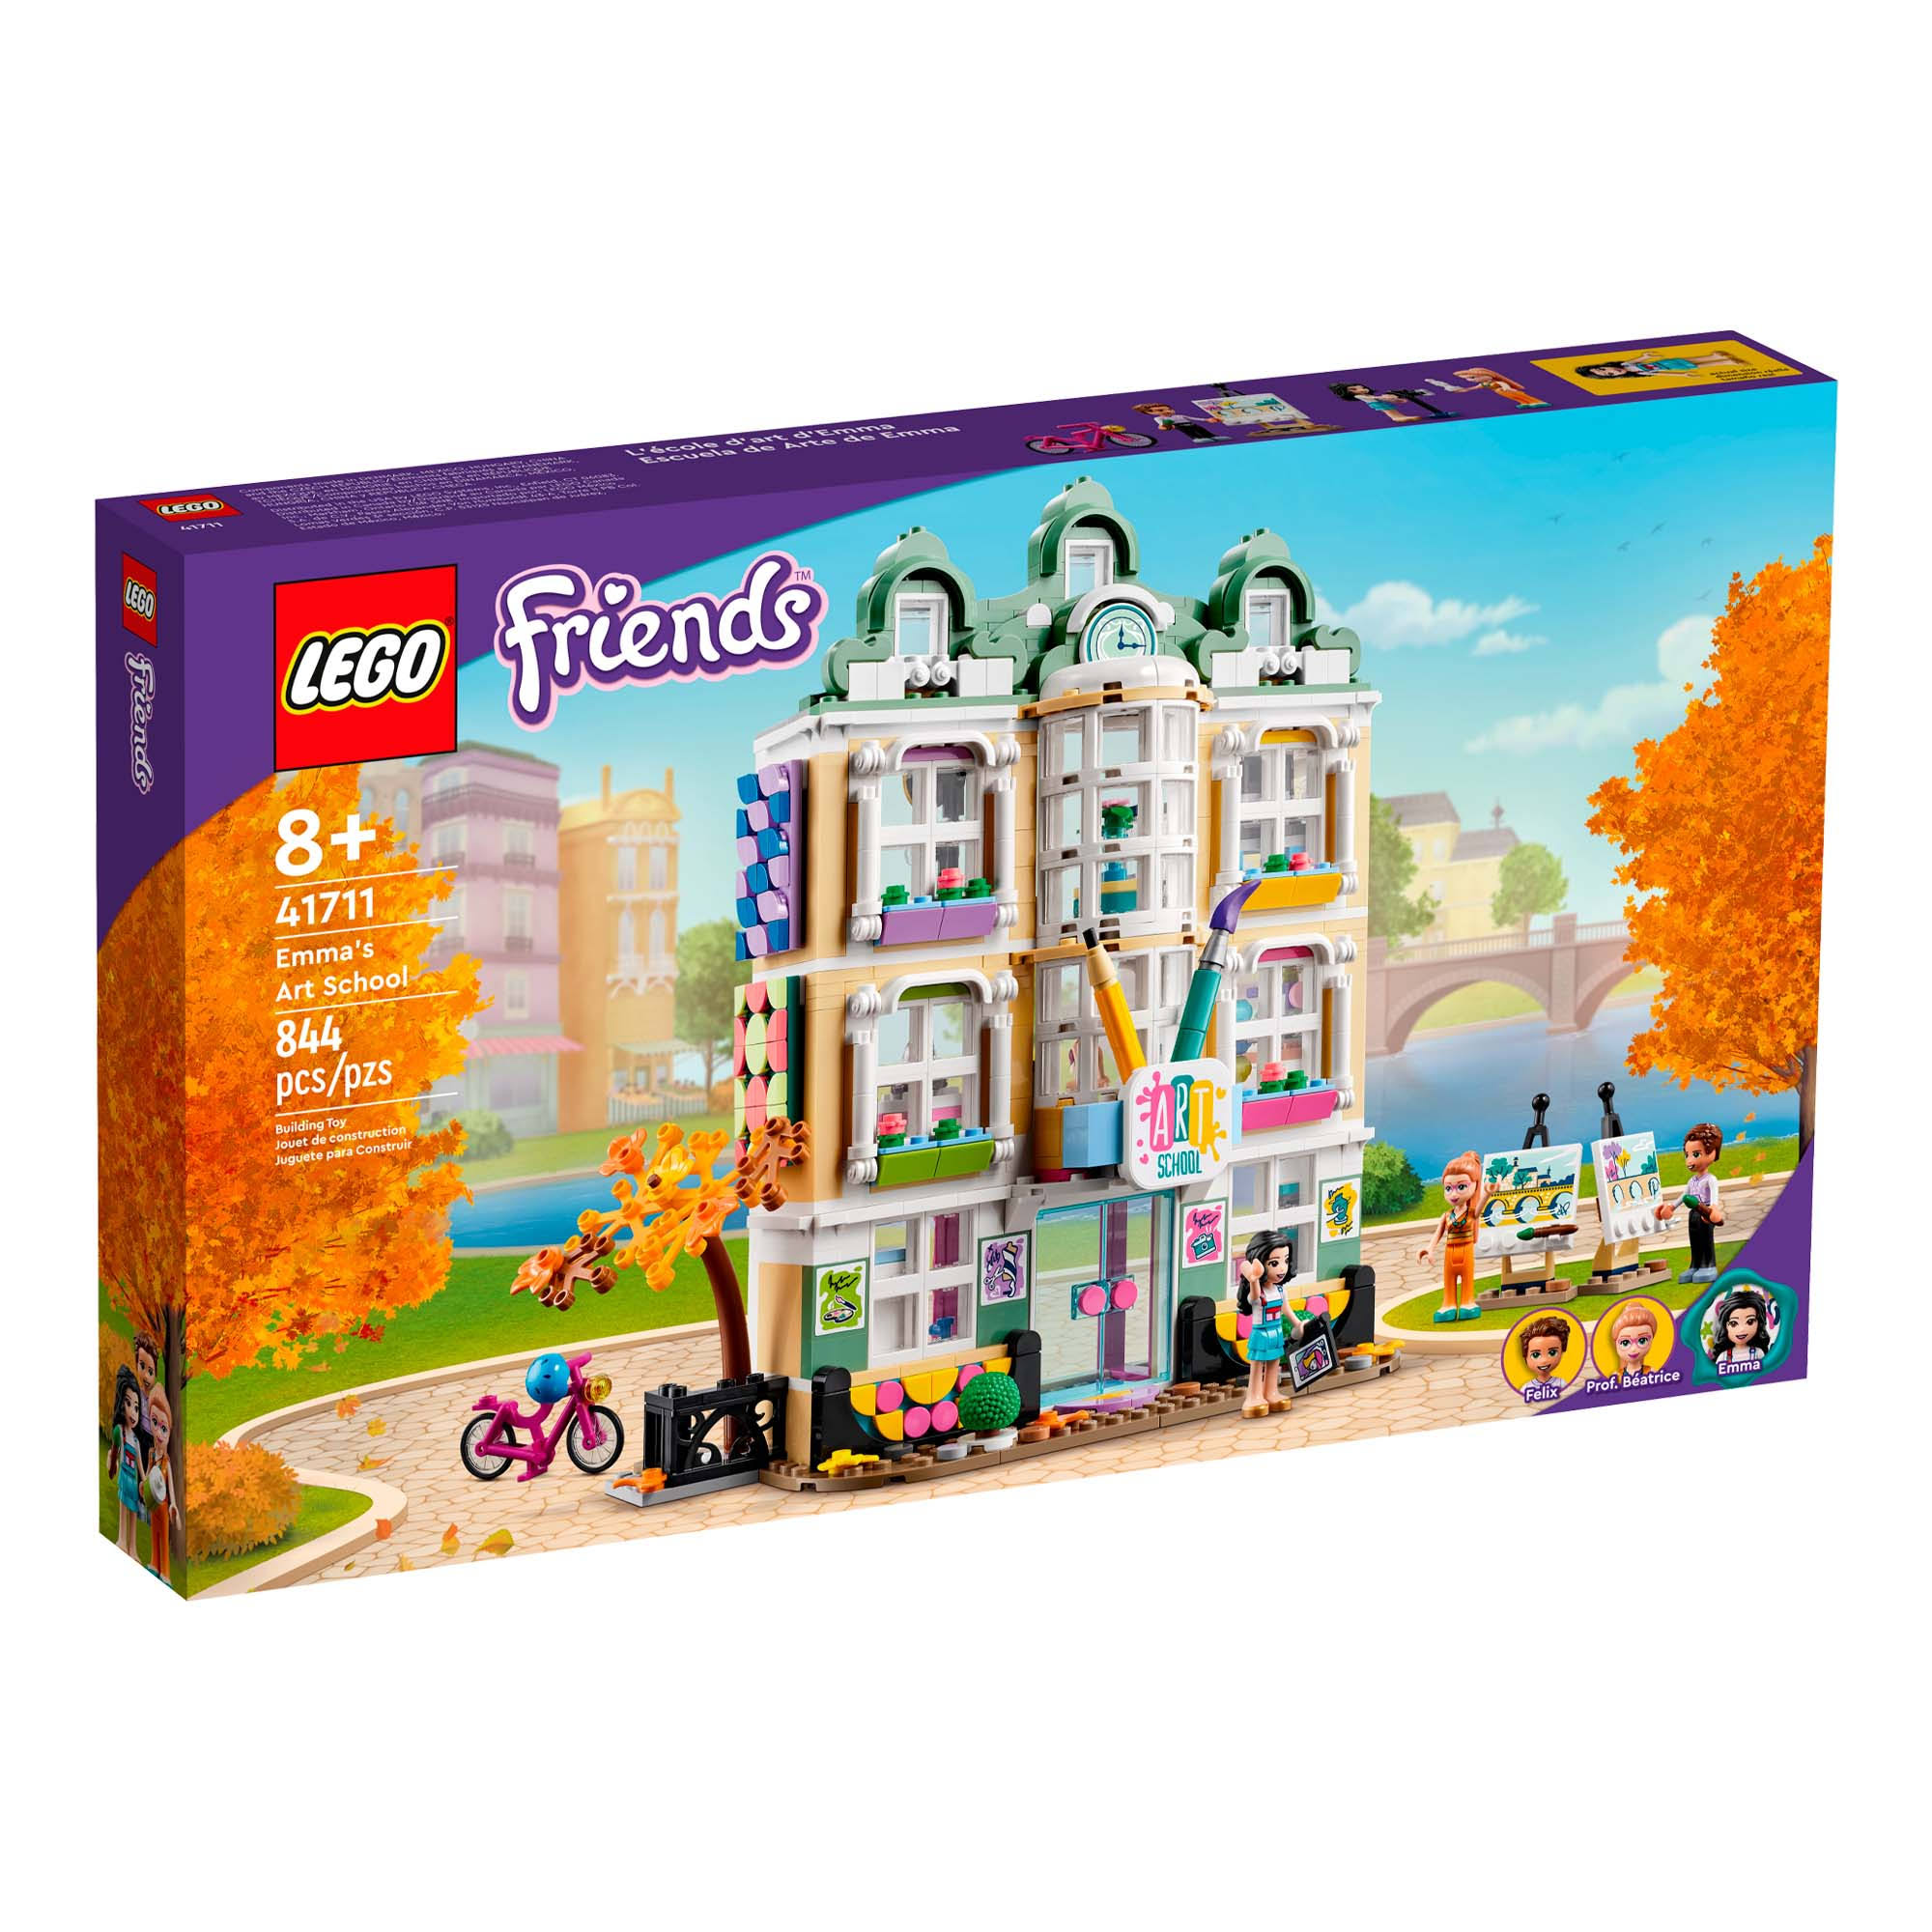 LEGO Friends Emma's Art School Set 41711